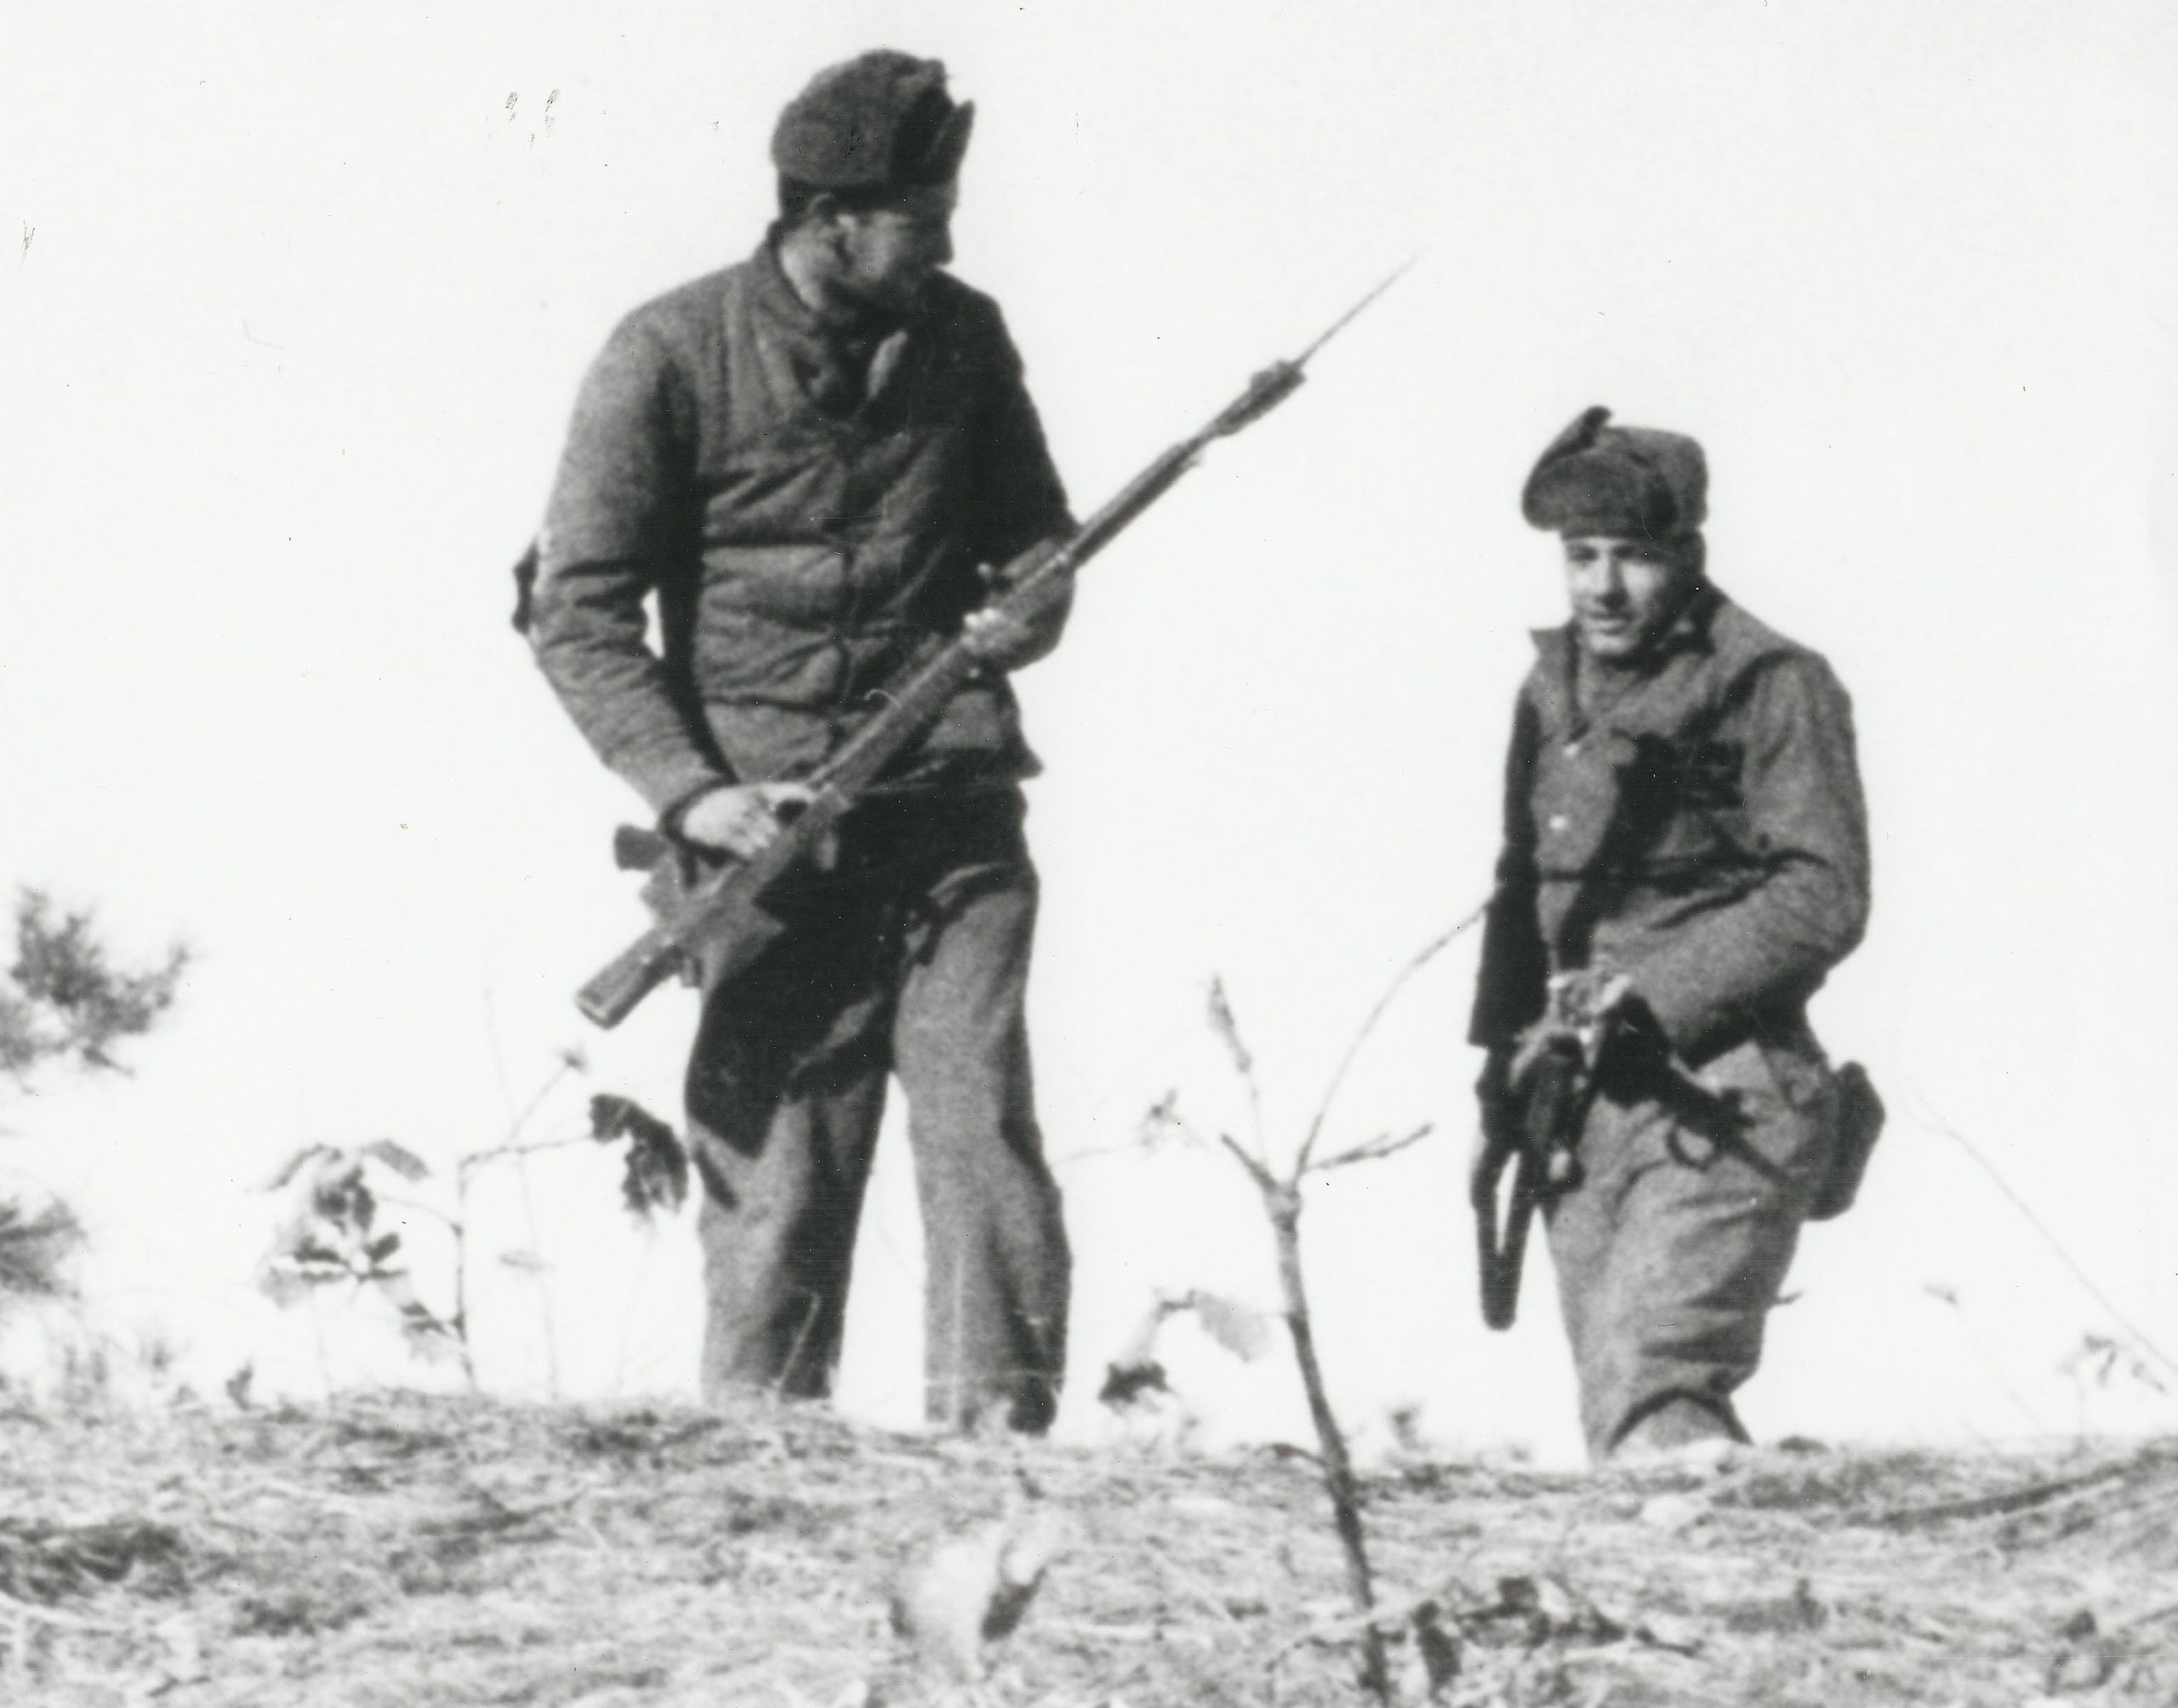 Robert & Richard on patrol against Chinese positions in North Korea, taken in November 1950.